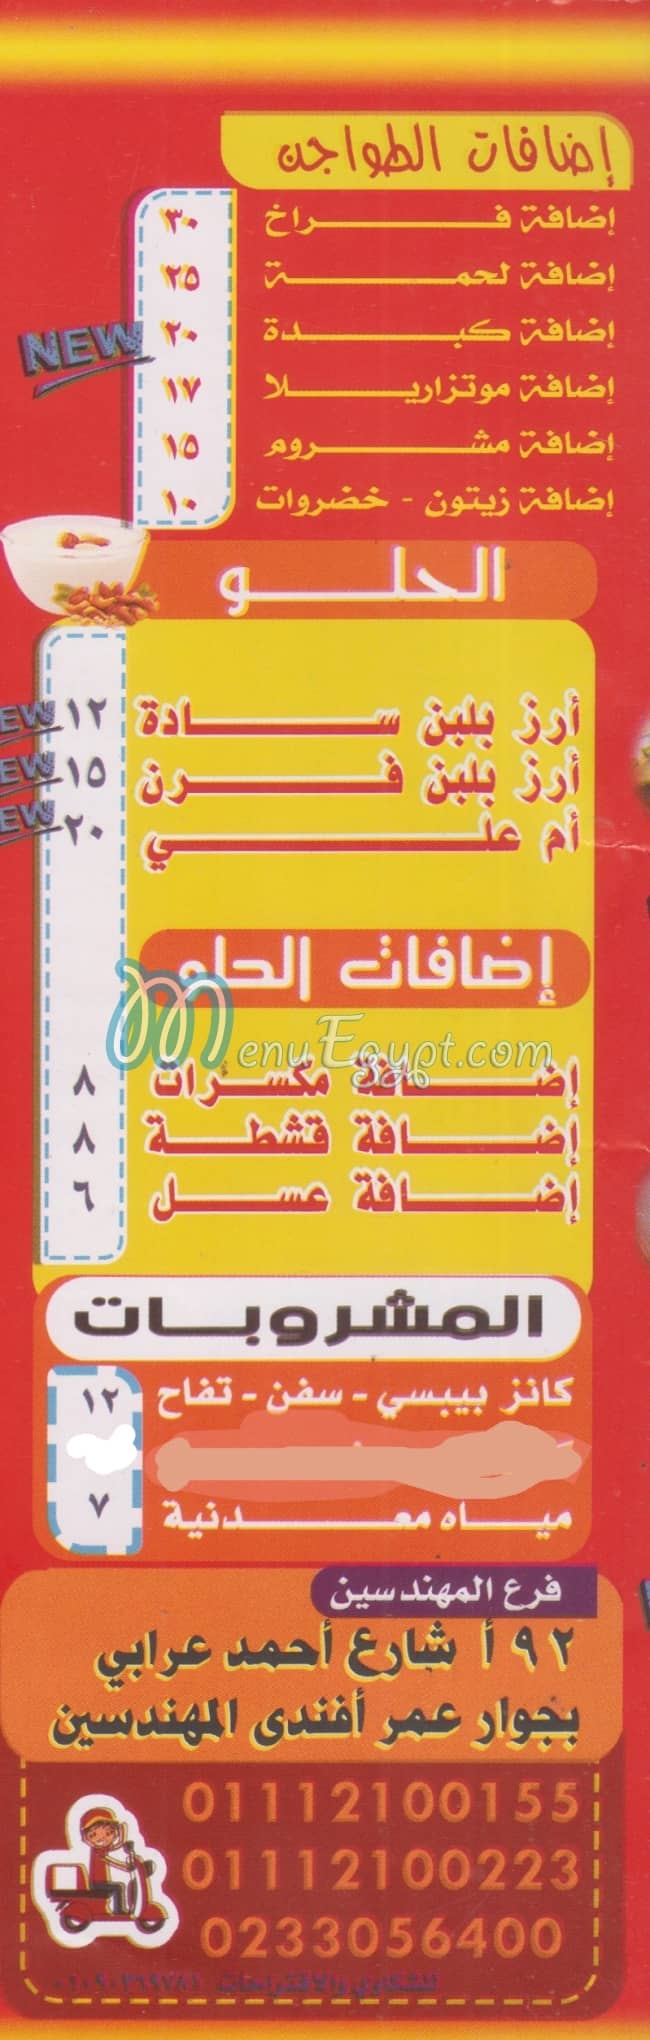 Koshary Hend menu Egypt